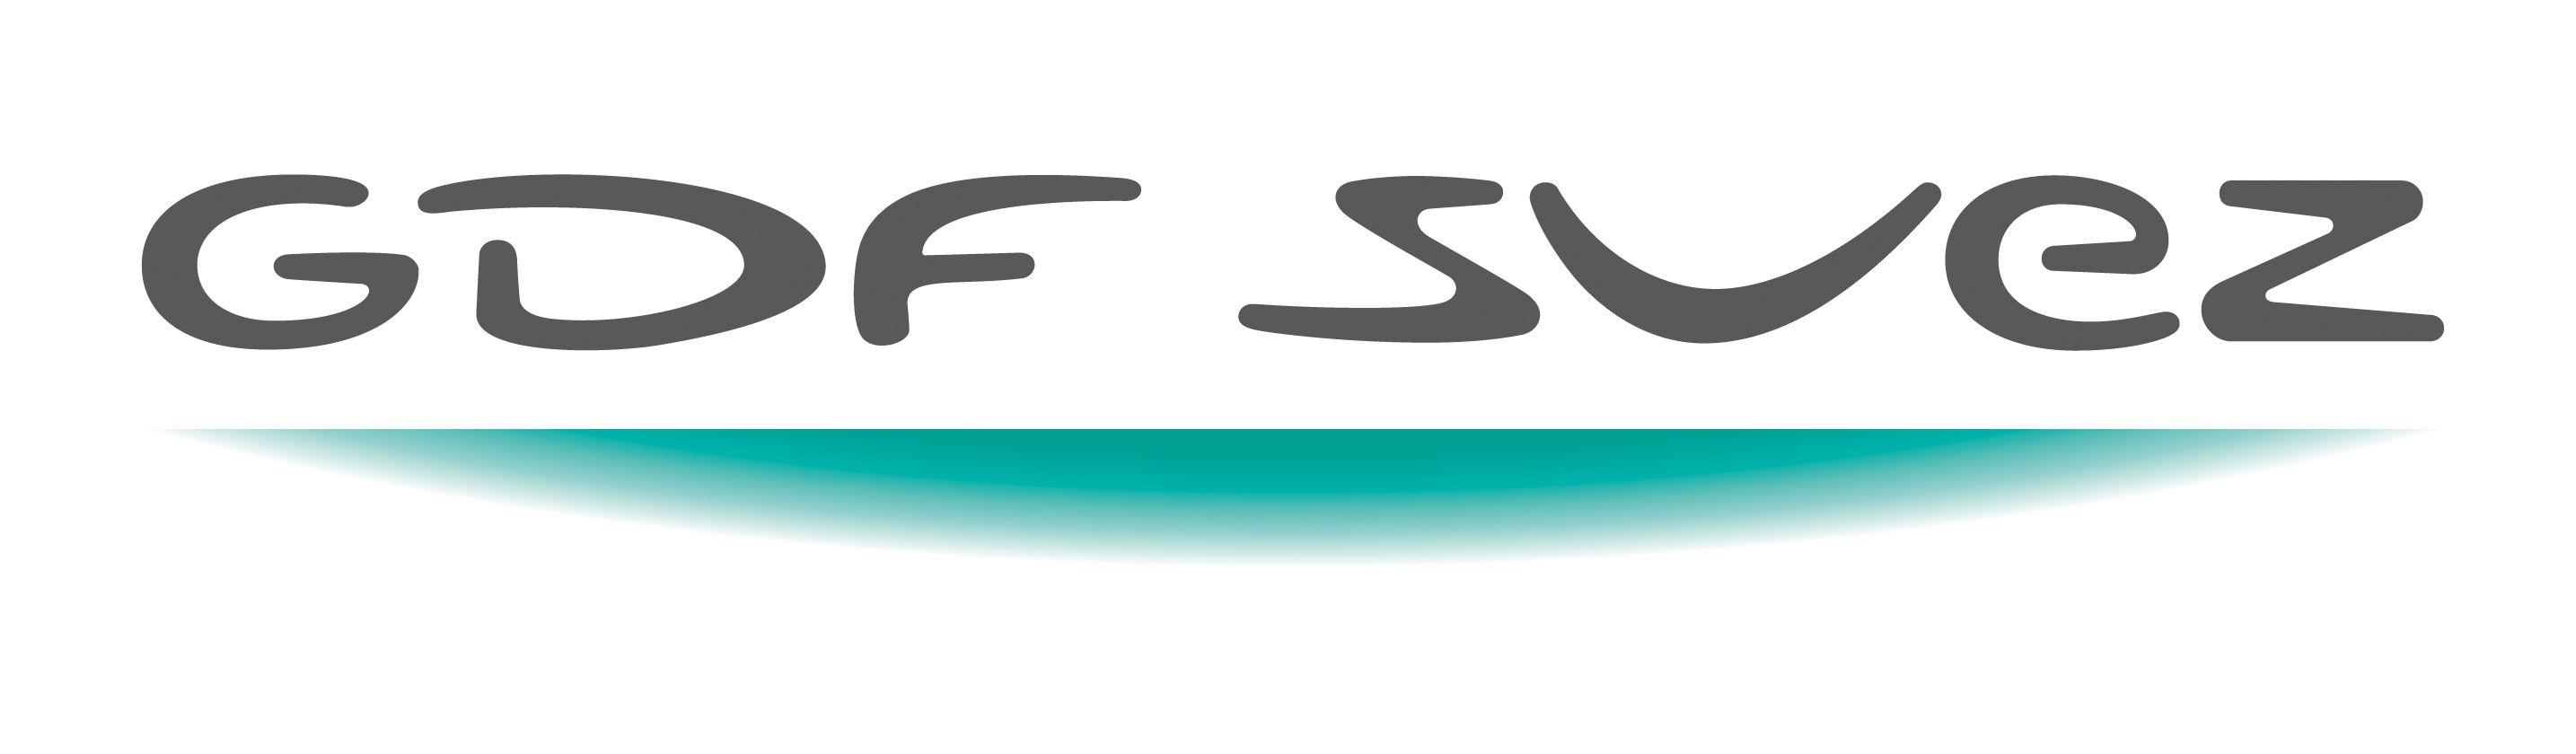 Suez Logo - GDF SUEZ Logo Color RGB | Connecticut Power & Energy Society